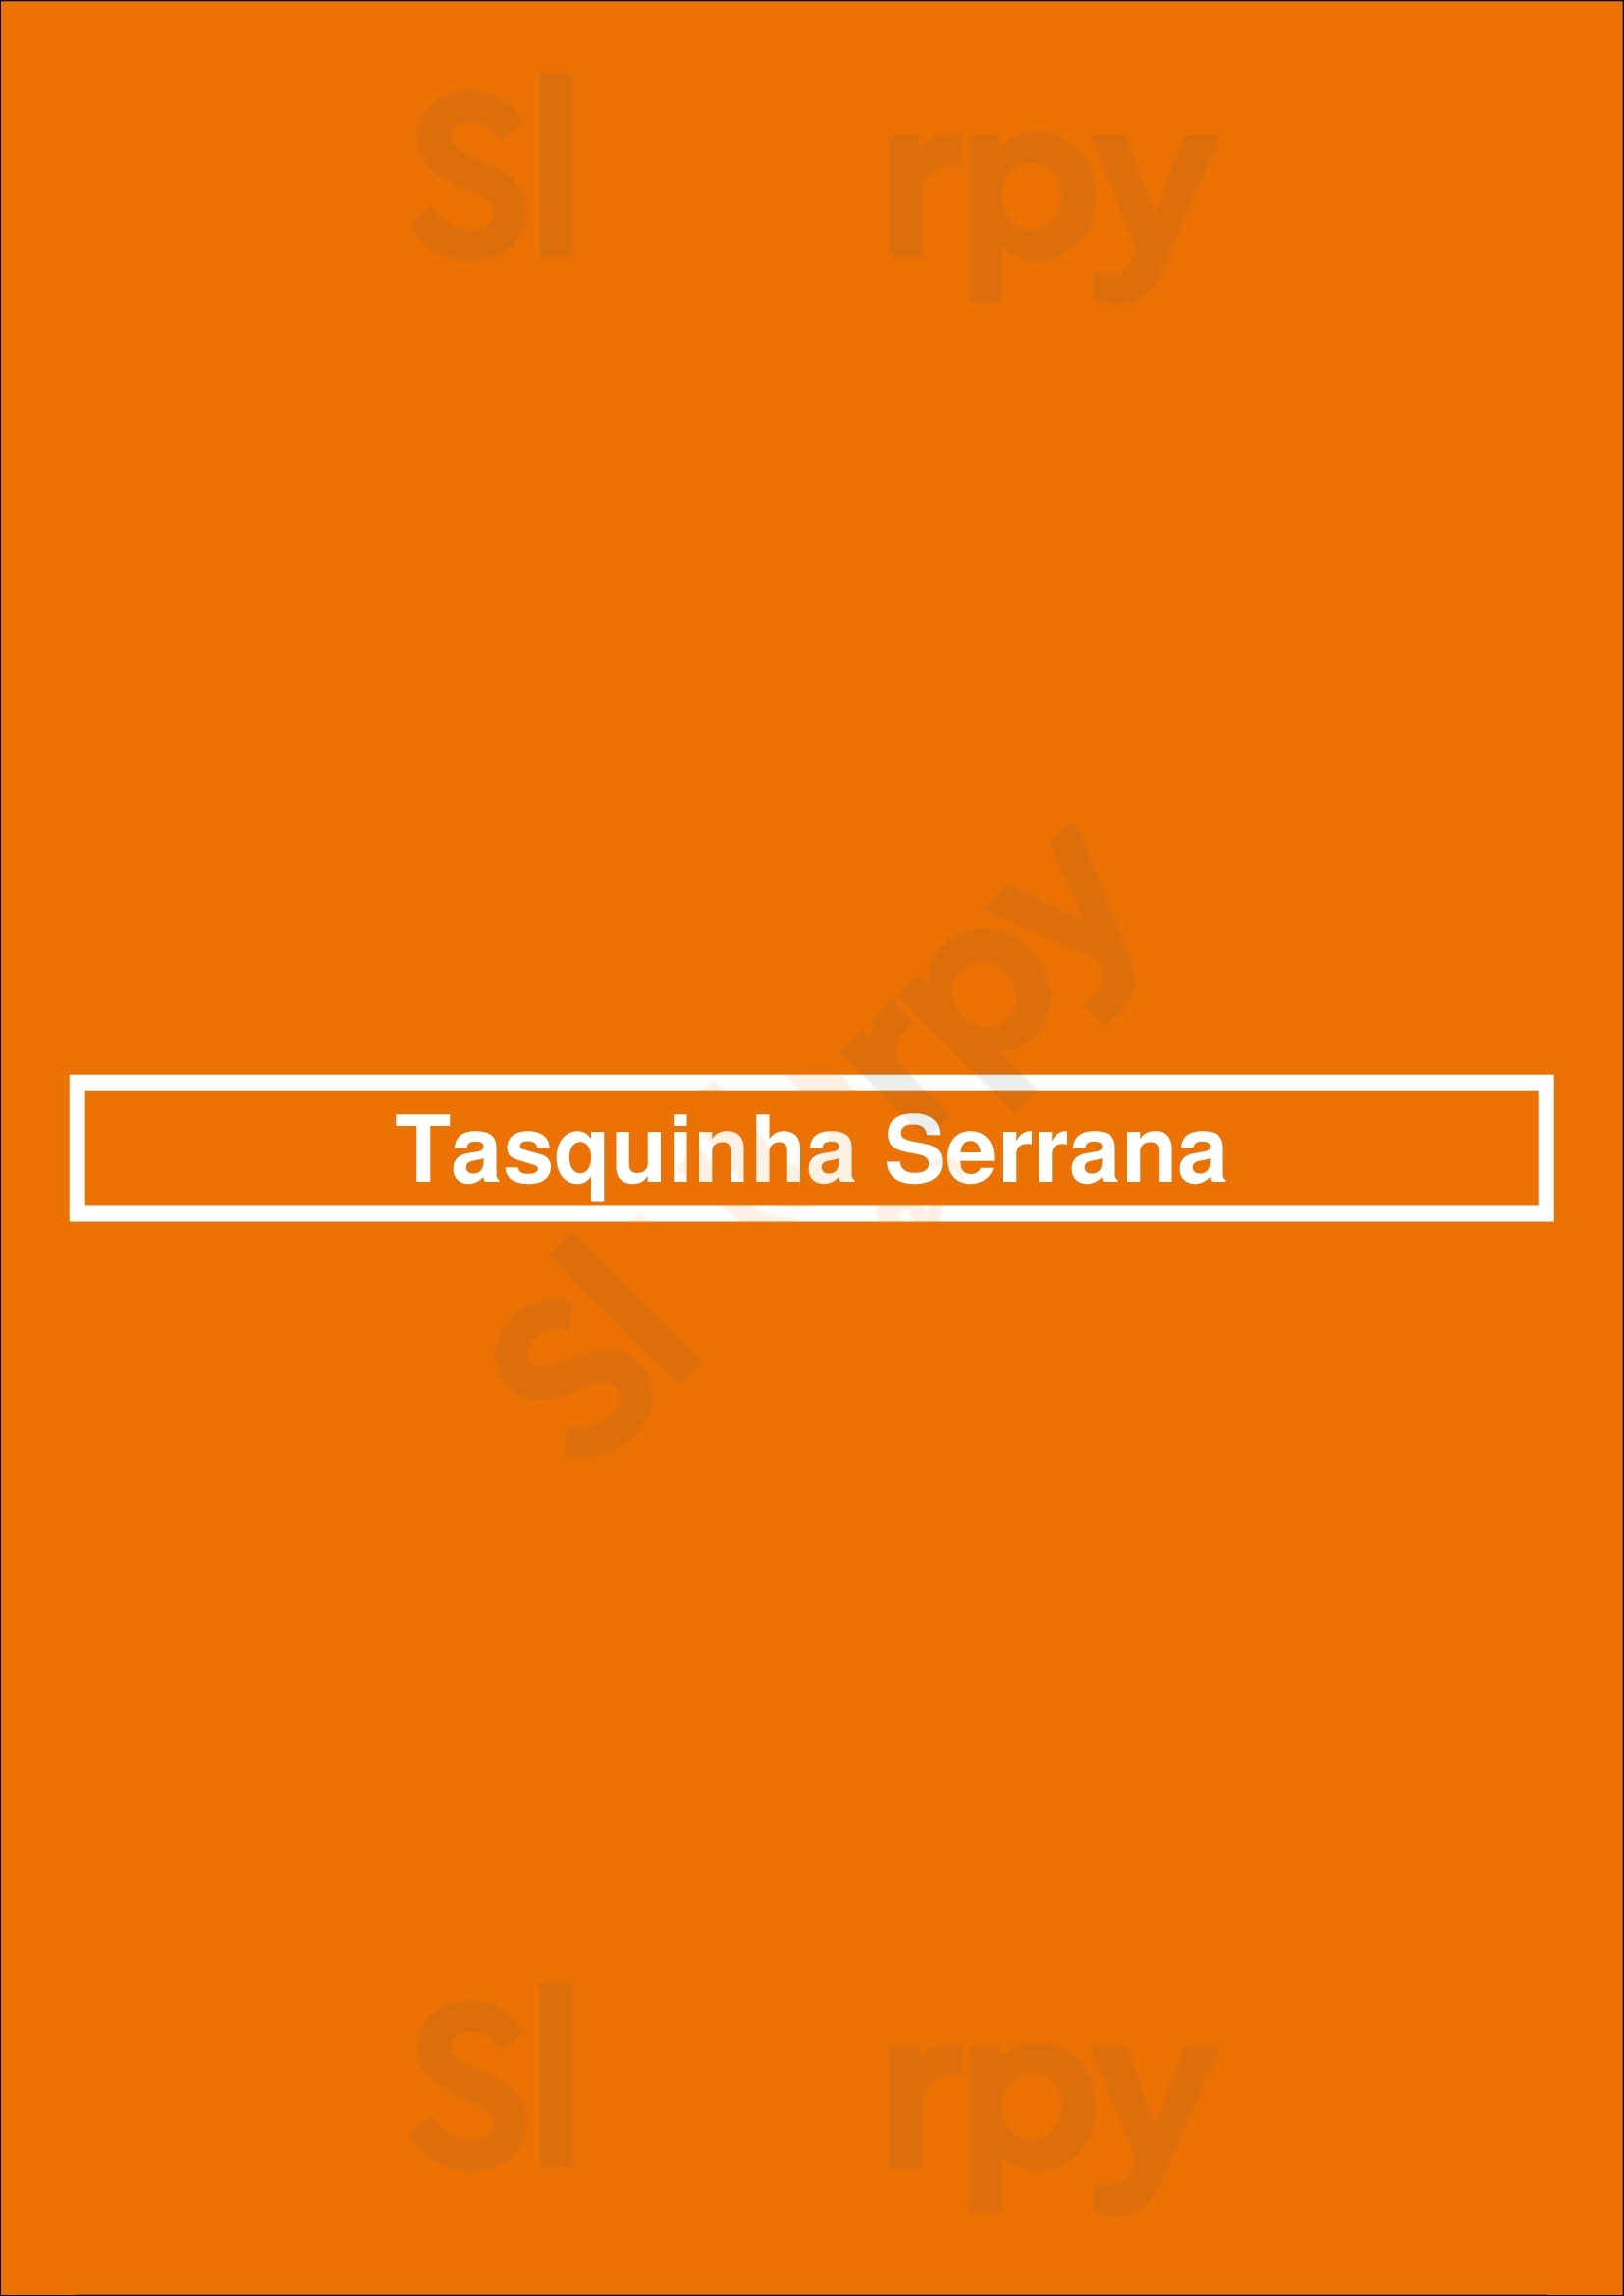 Tasquinha Serrana Lisboa Menu - 1